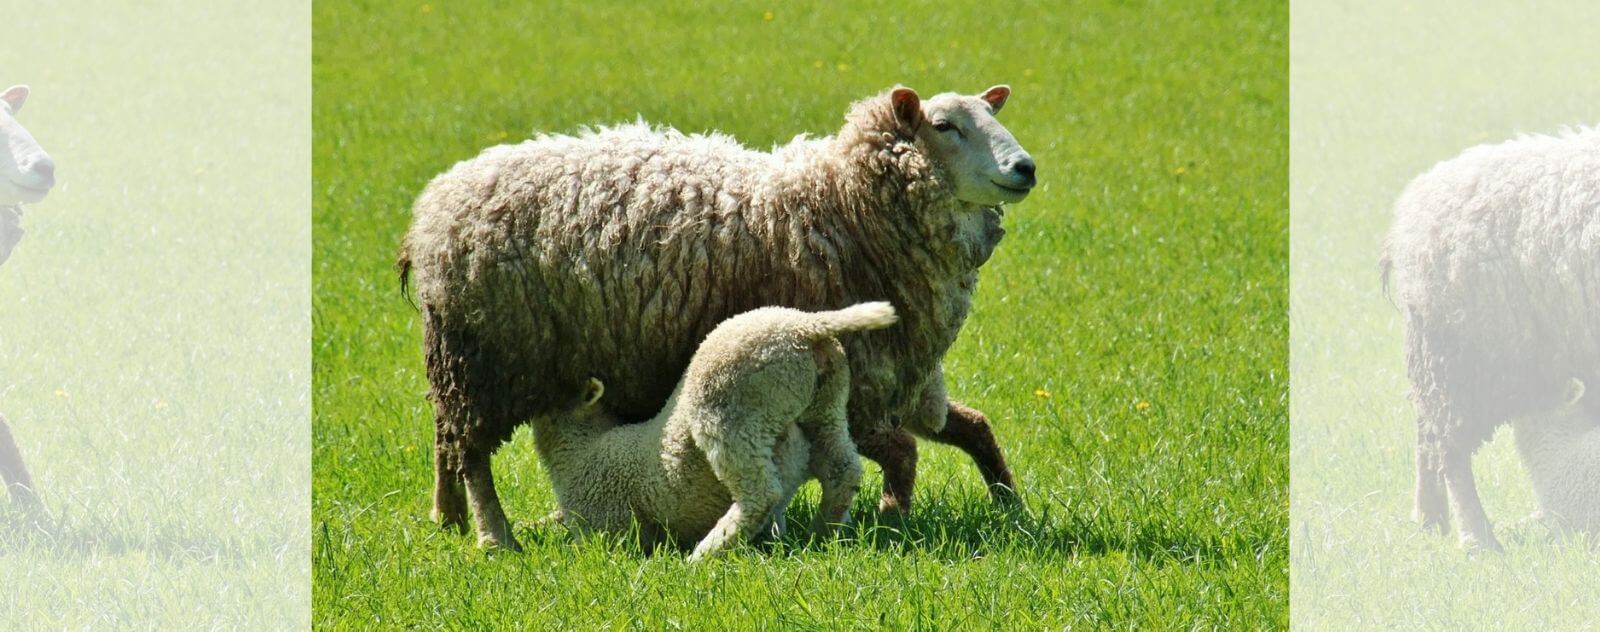 Lambs sucking milk from a sheep